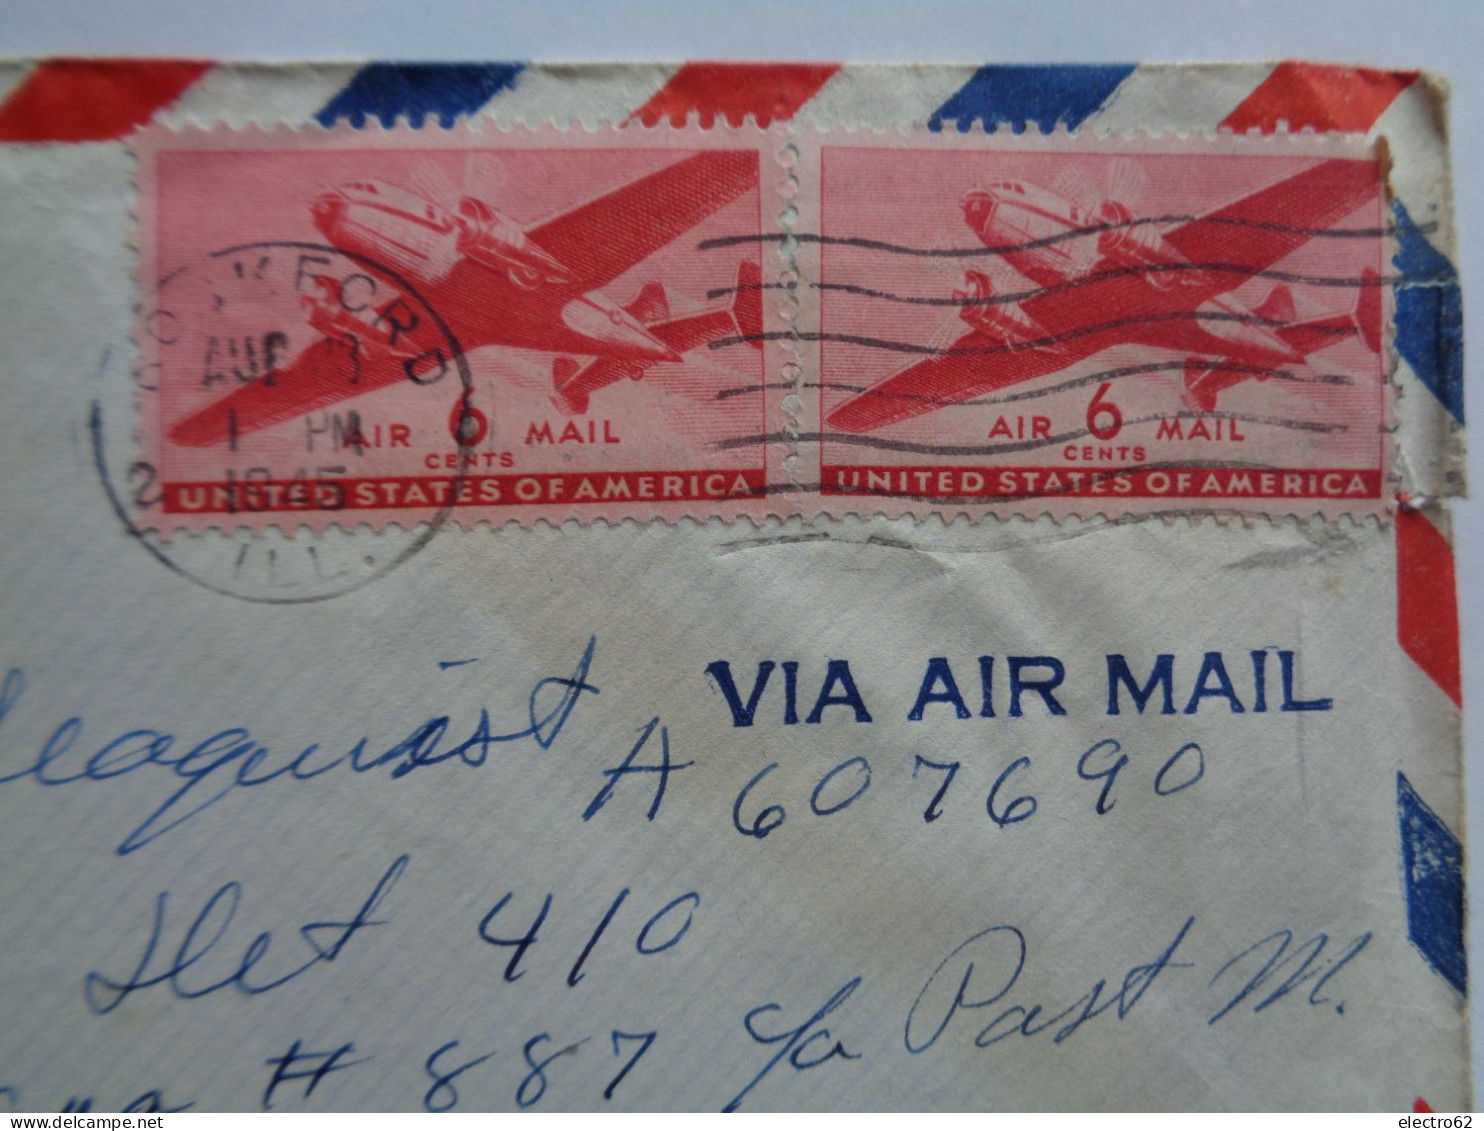 Etats-Unis enveloppes 1945 avion aigle eagle plane planes United States